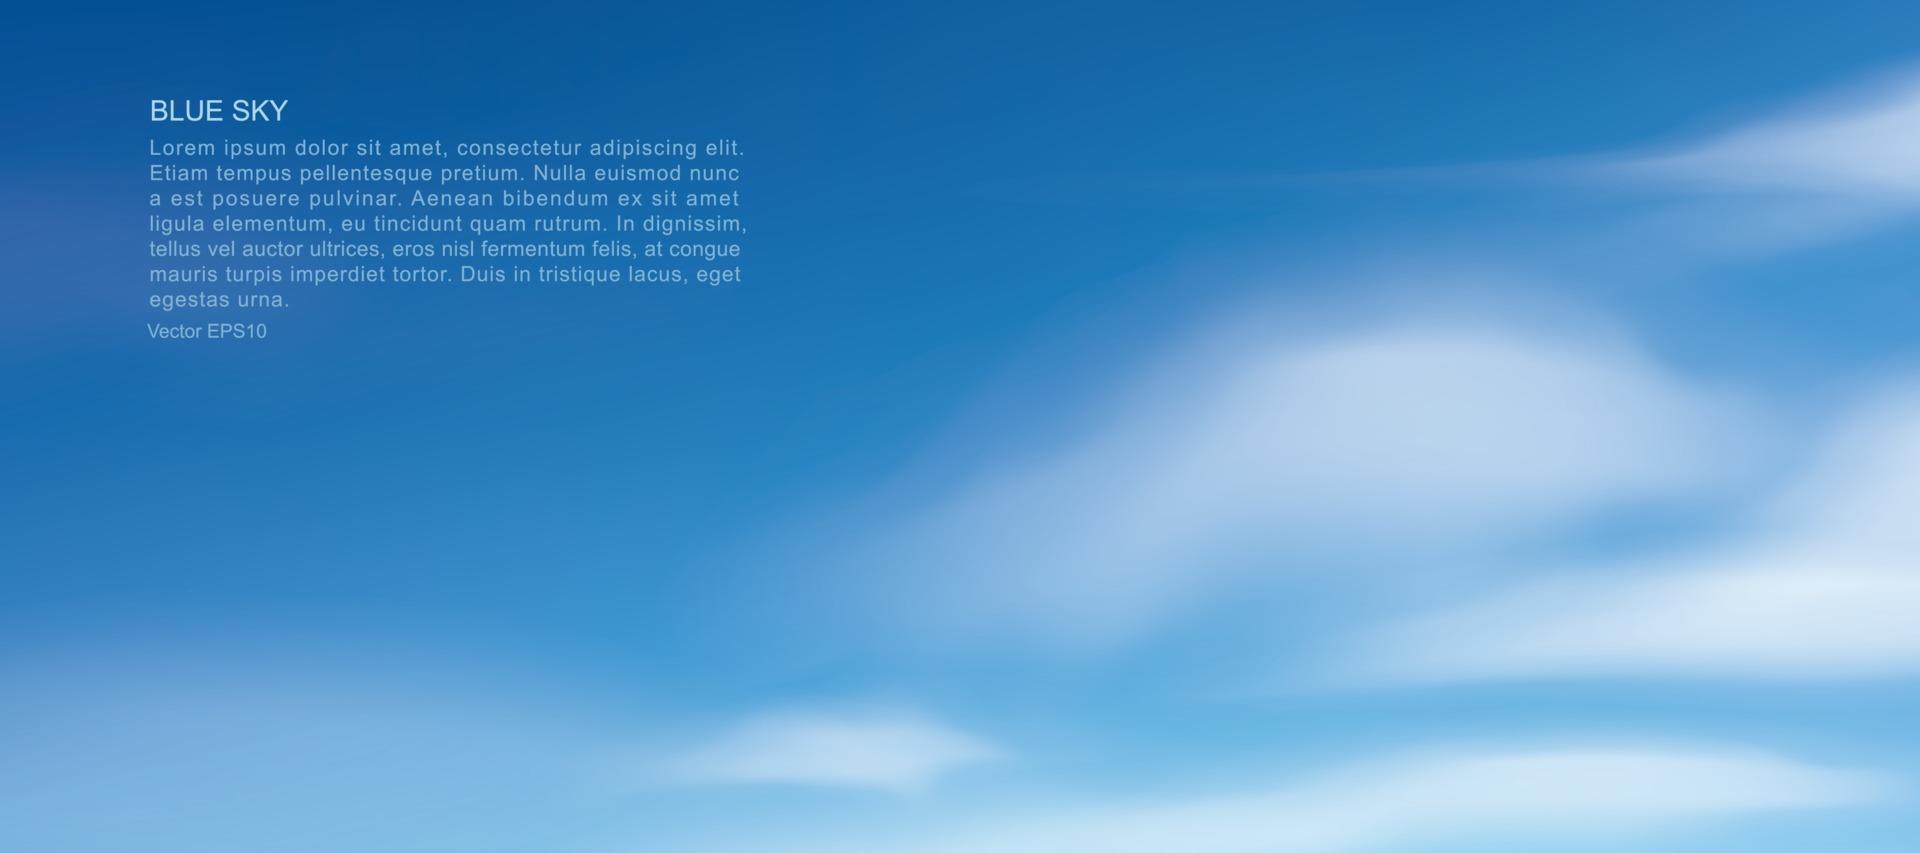 blå himmel bakgrund med vita moln. vektor